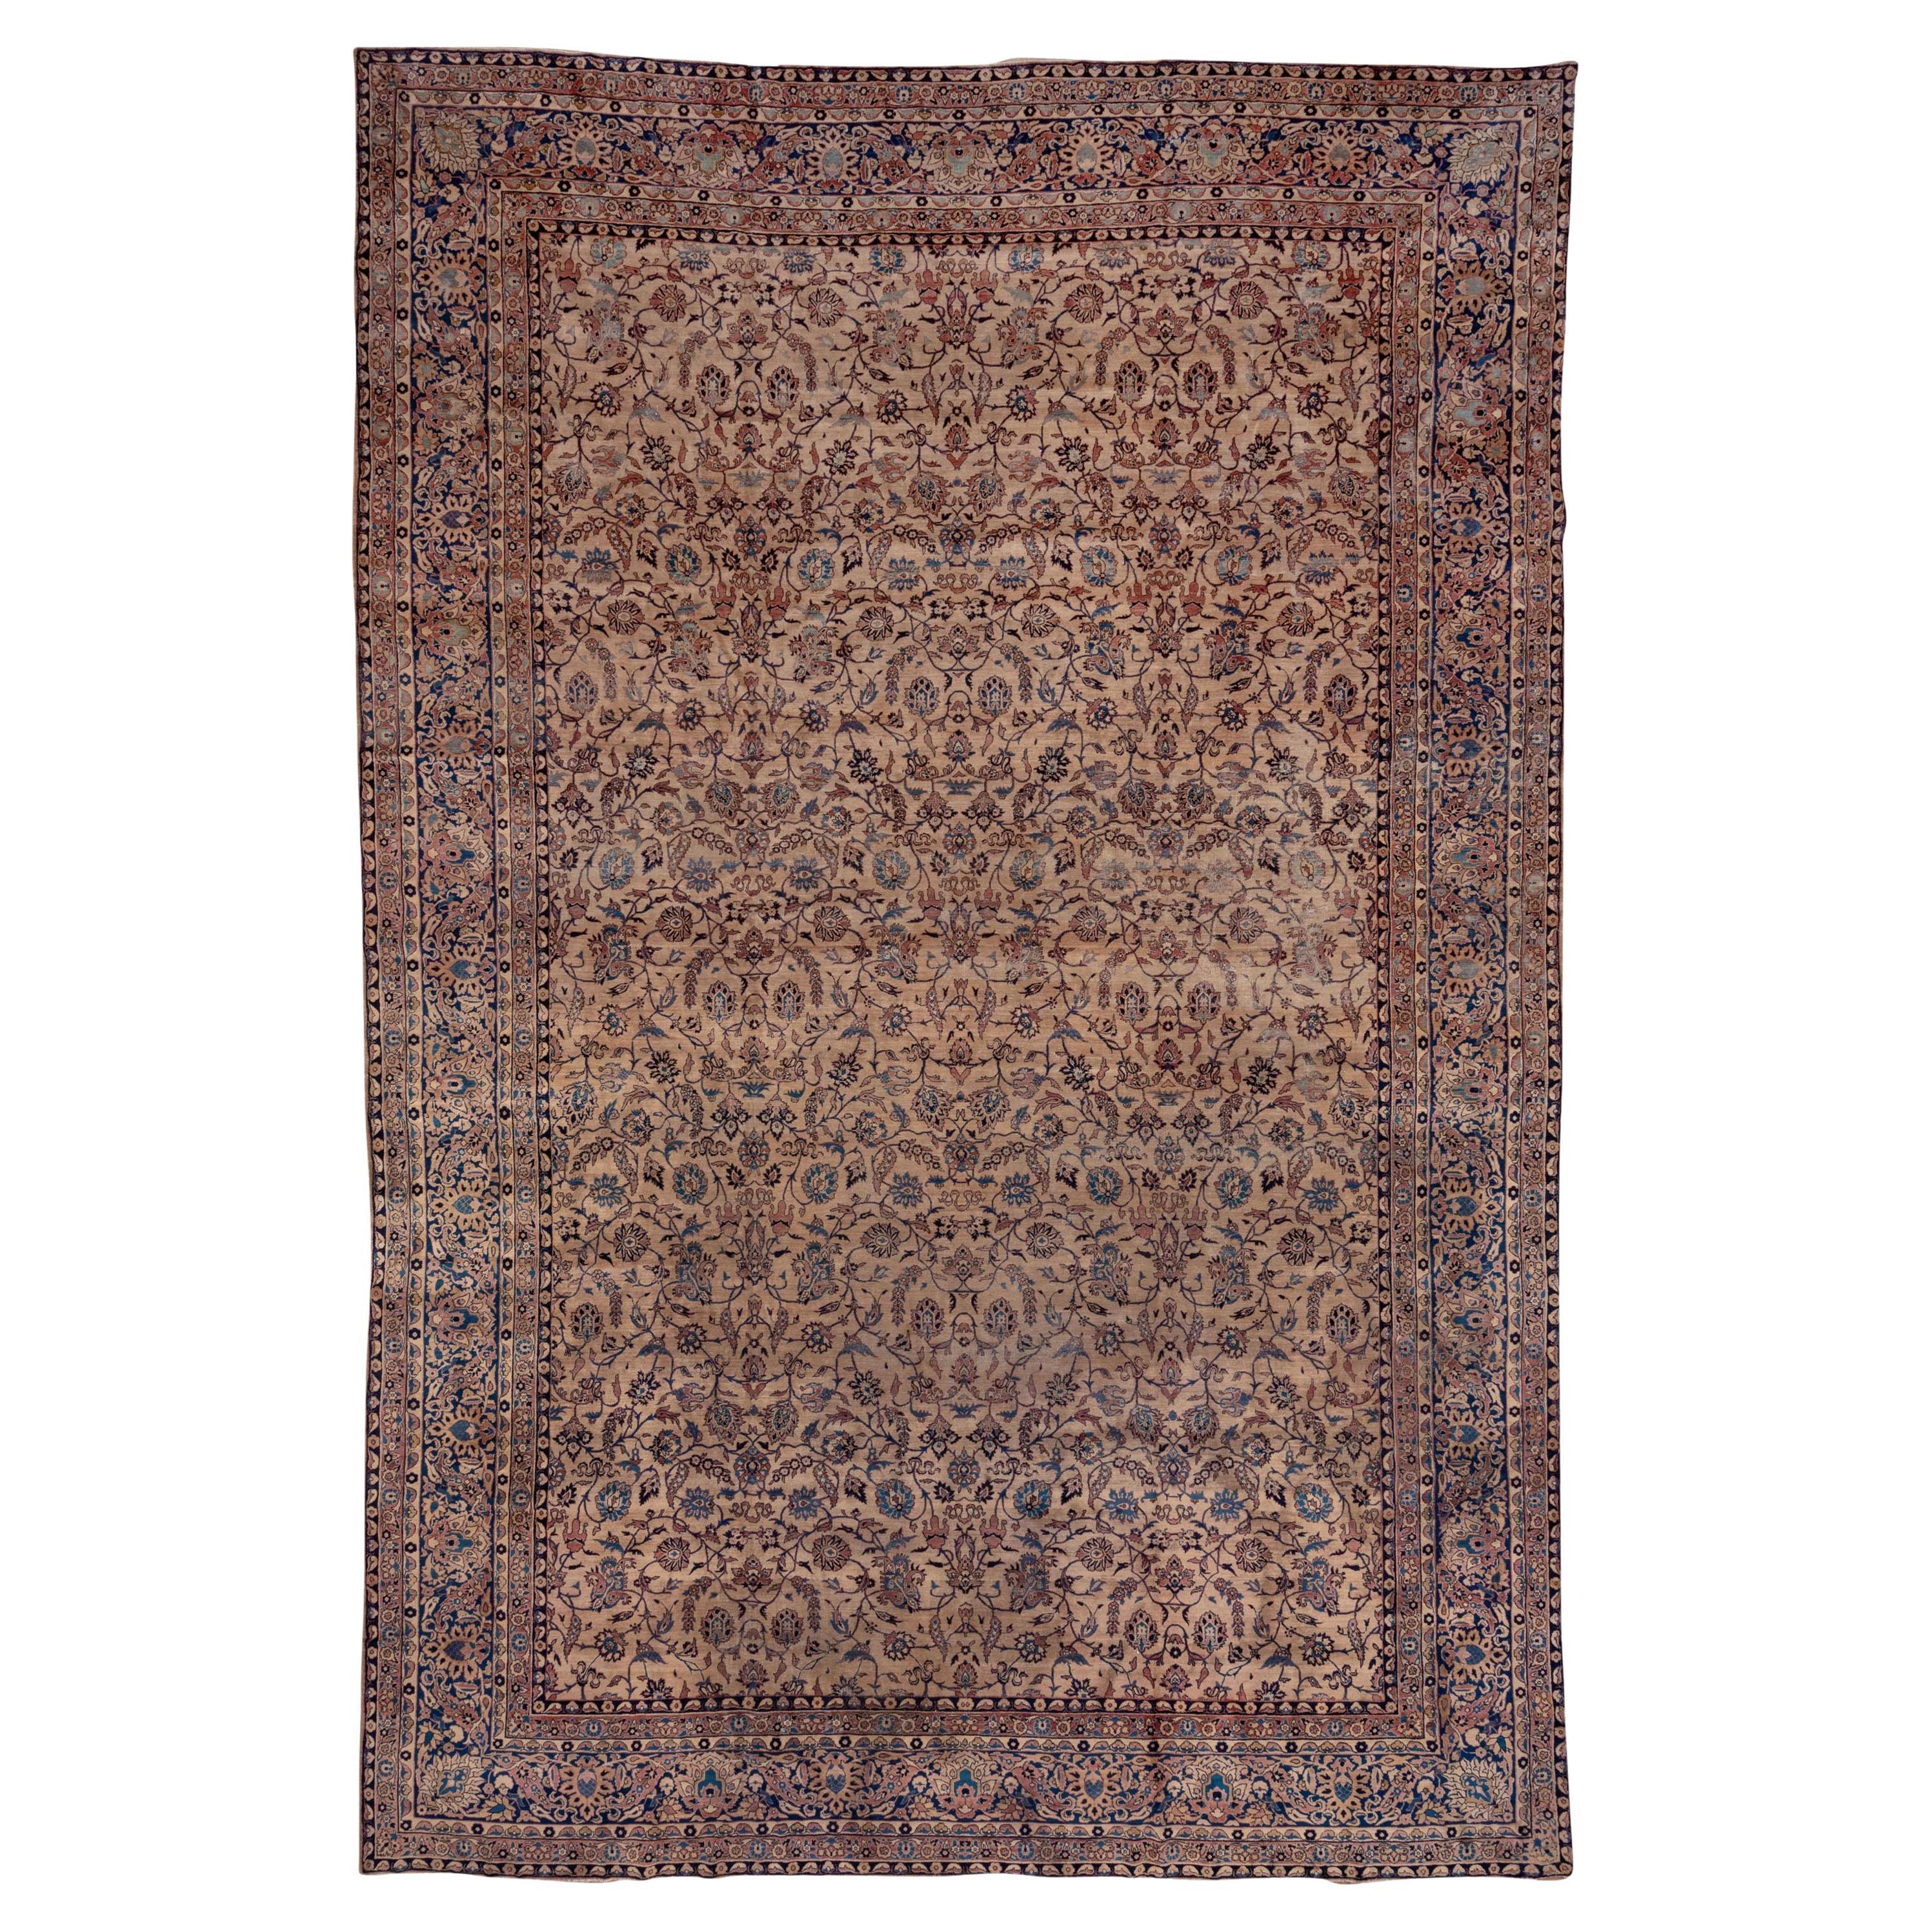 Fine Antique Sarouk Farahan Mansion Carpet, All-Over Field, Light Brown Field